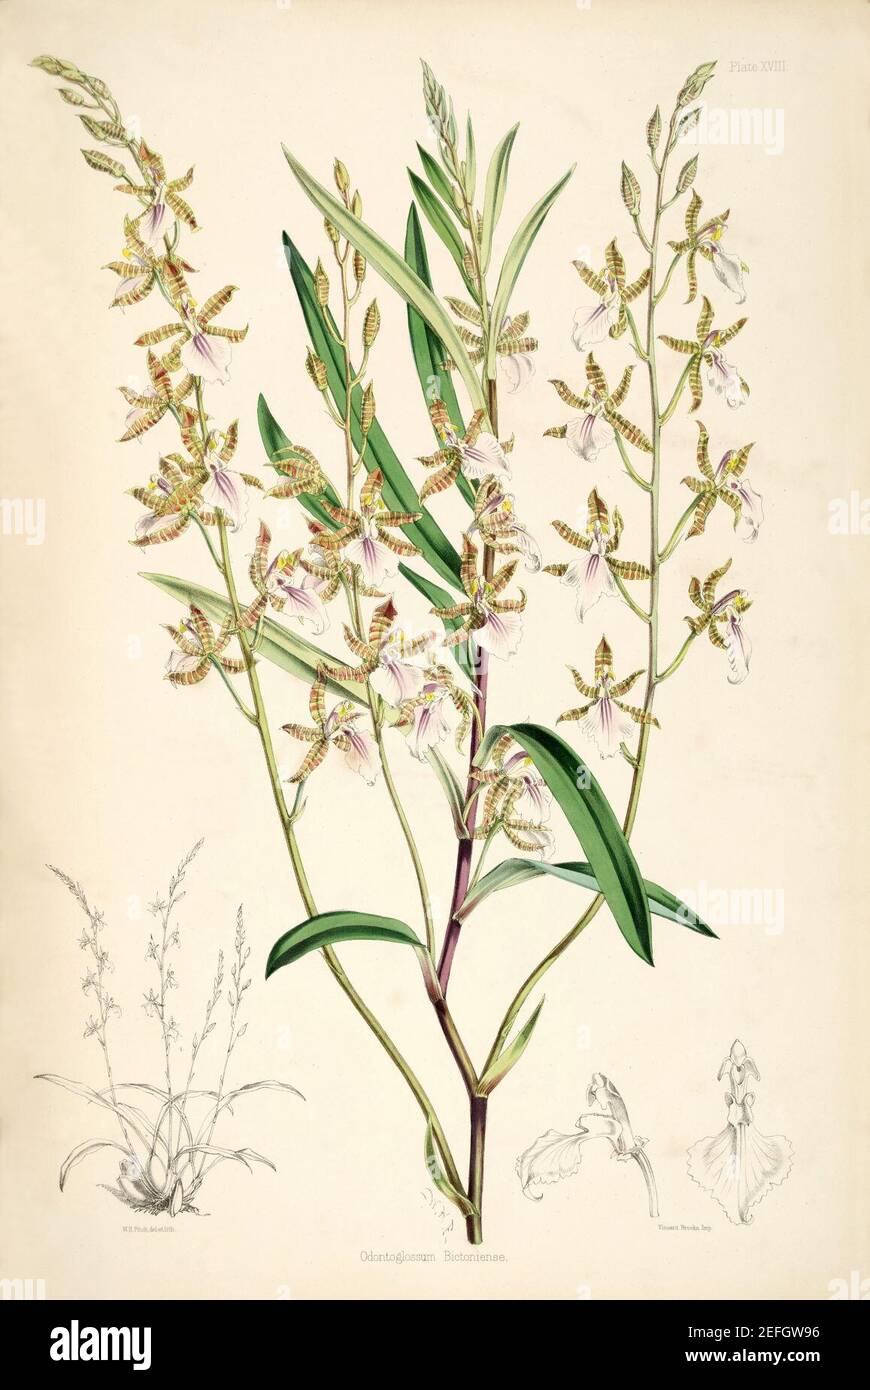 Odontoglossum bictoniense (syn Rhynchostele bictoniensis, Lemboglossum bictoniense) - pl. 18 - Bateman, Monogr.Odont. Stock Photo